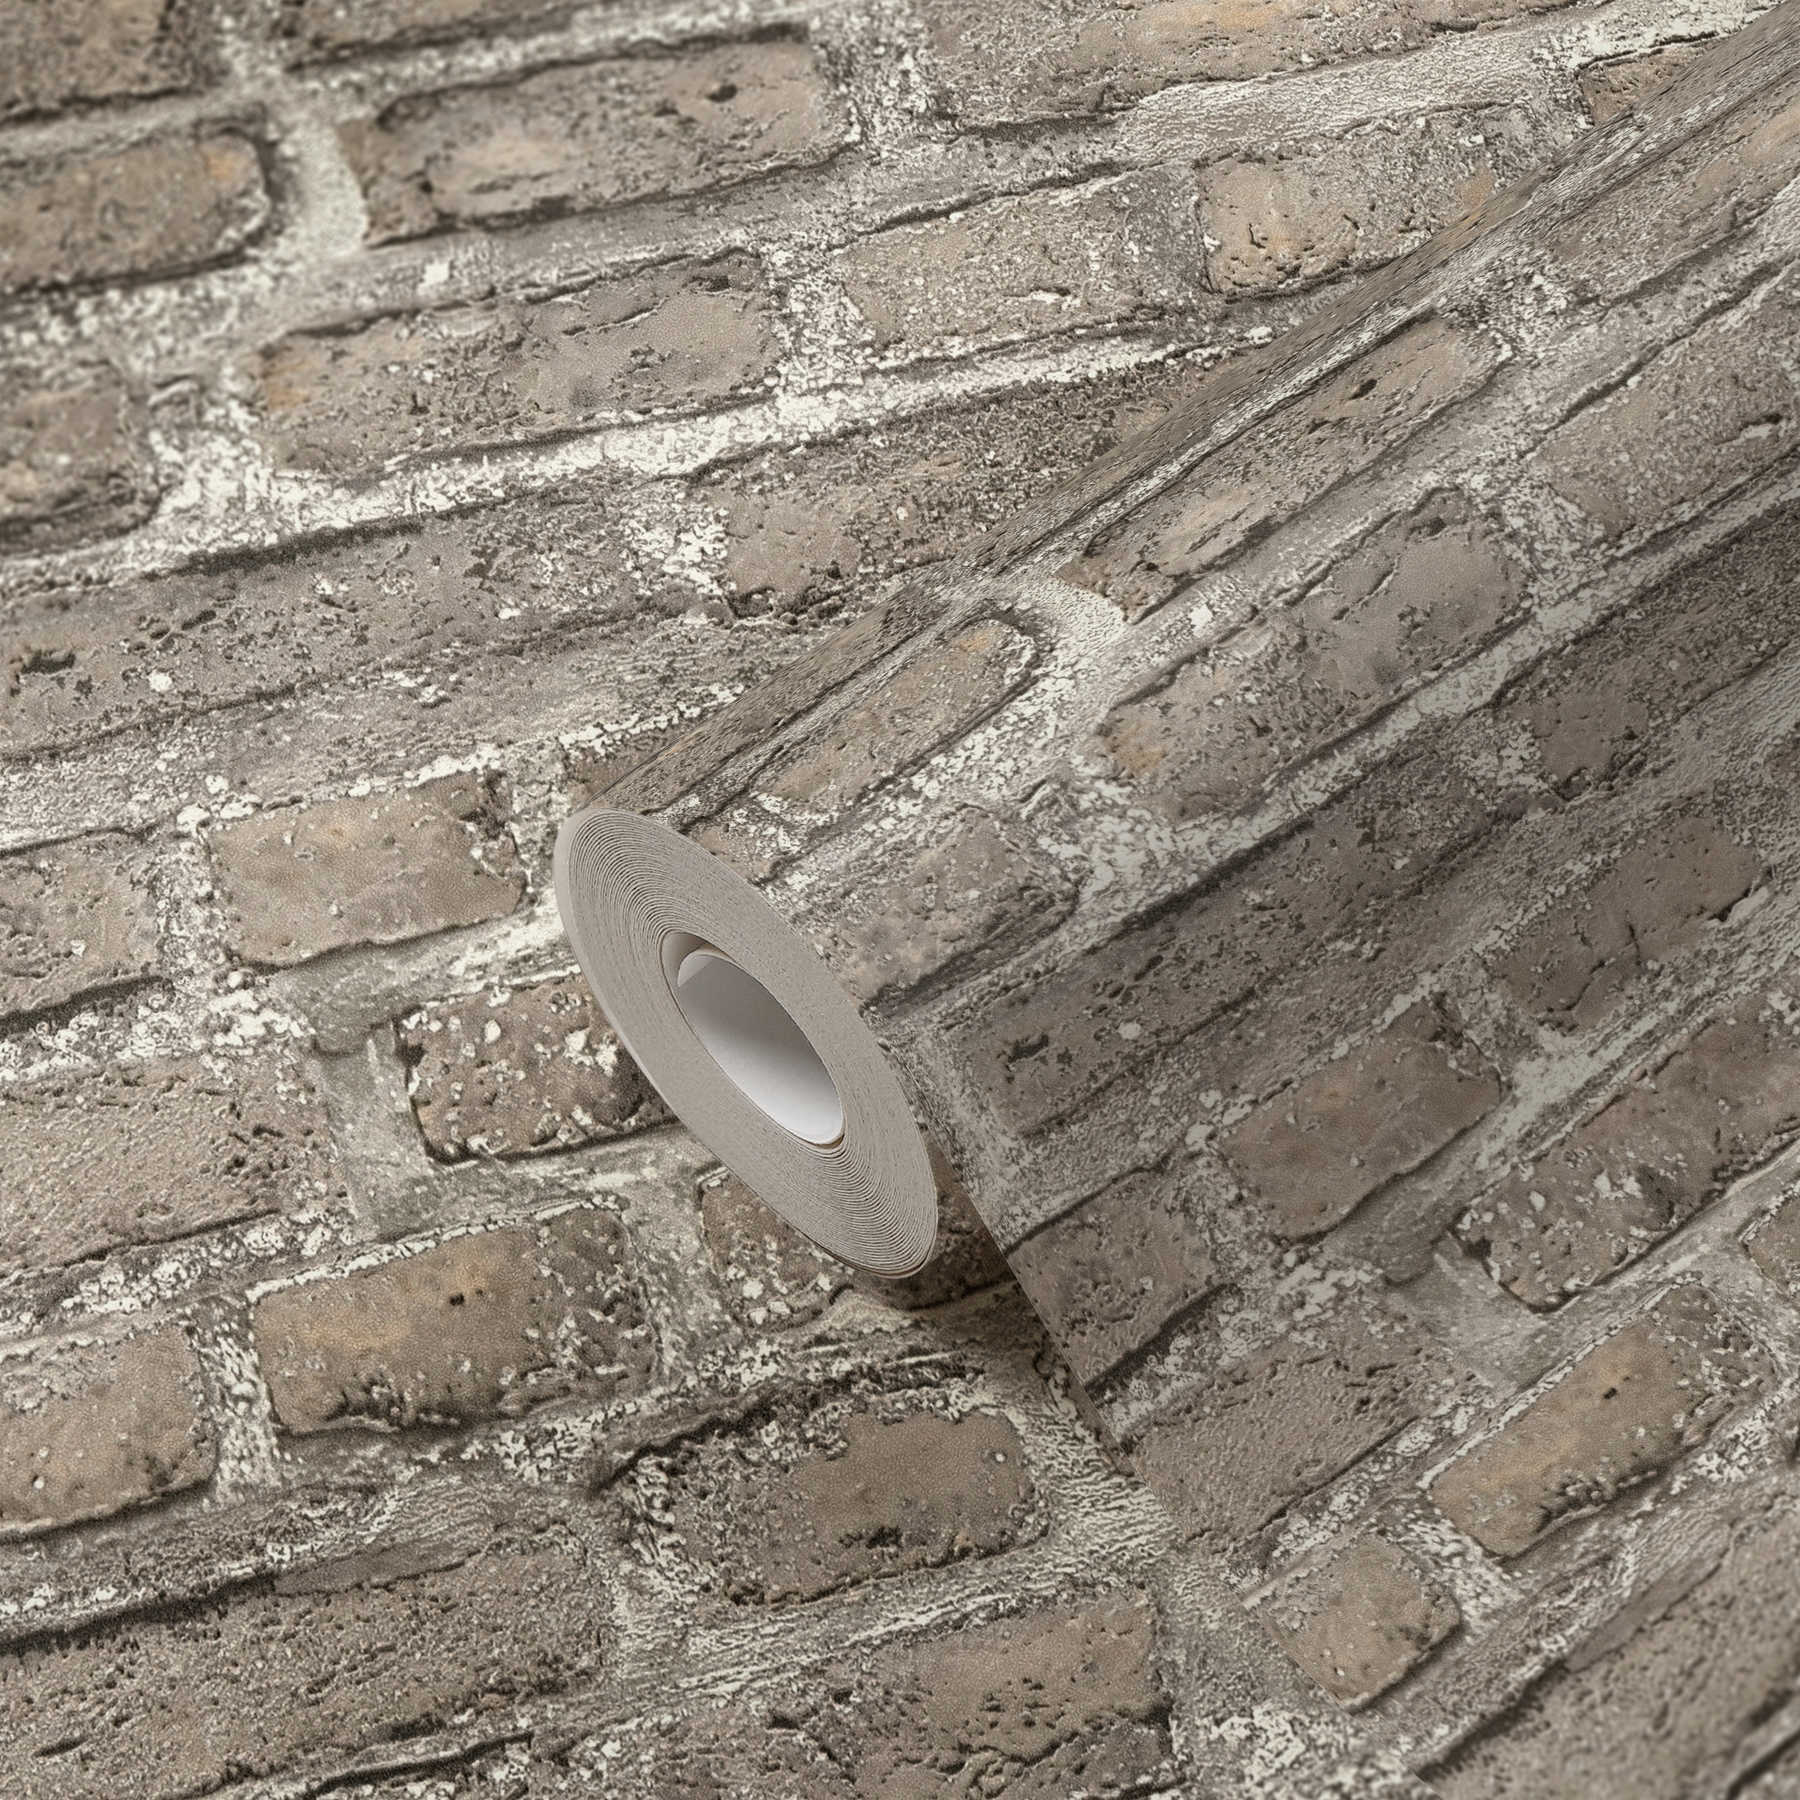             Tapete mit rustikalem Mauer-Motiv im Industrial Style – Grau, Braun
        